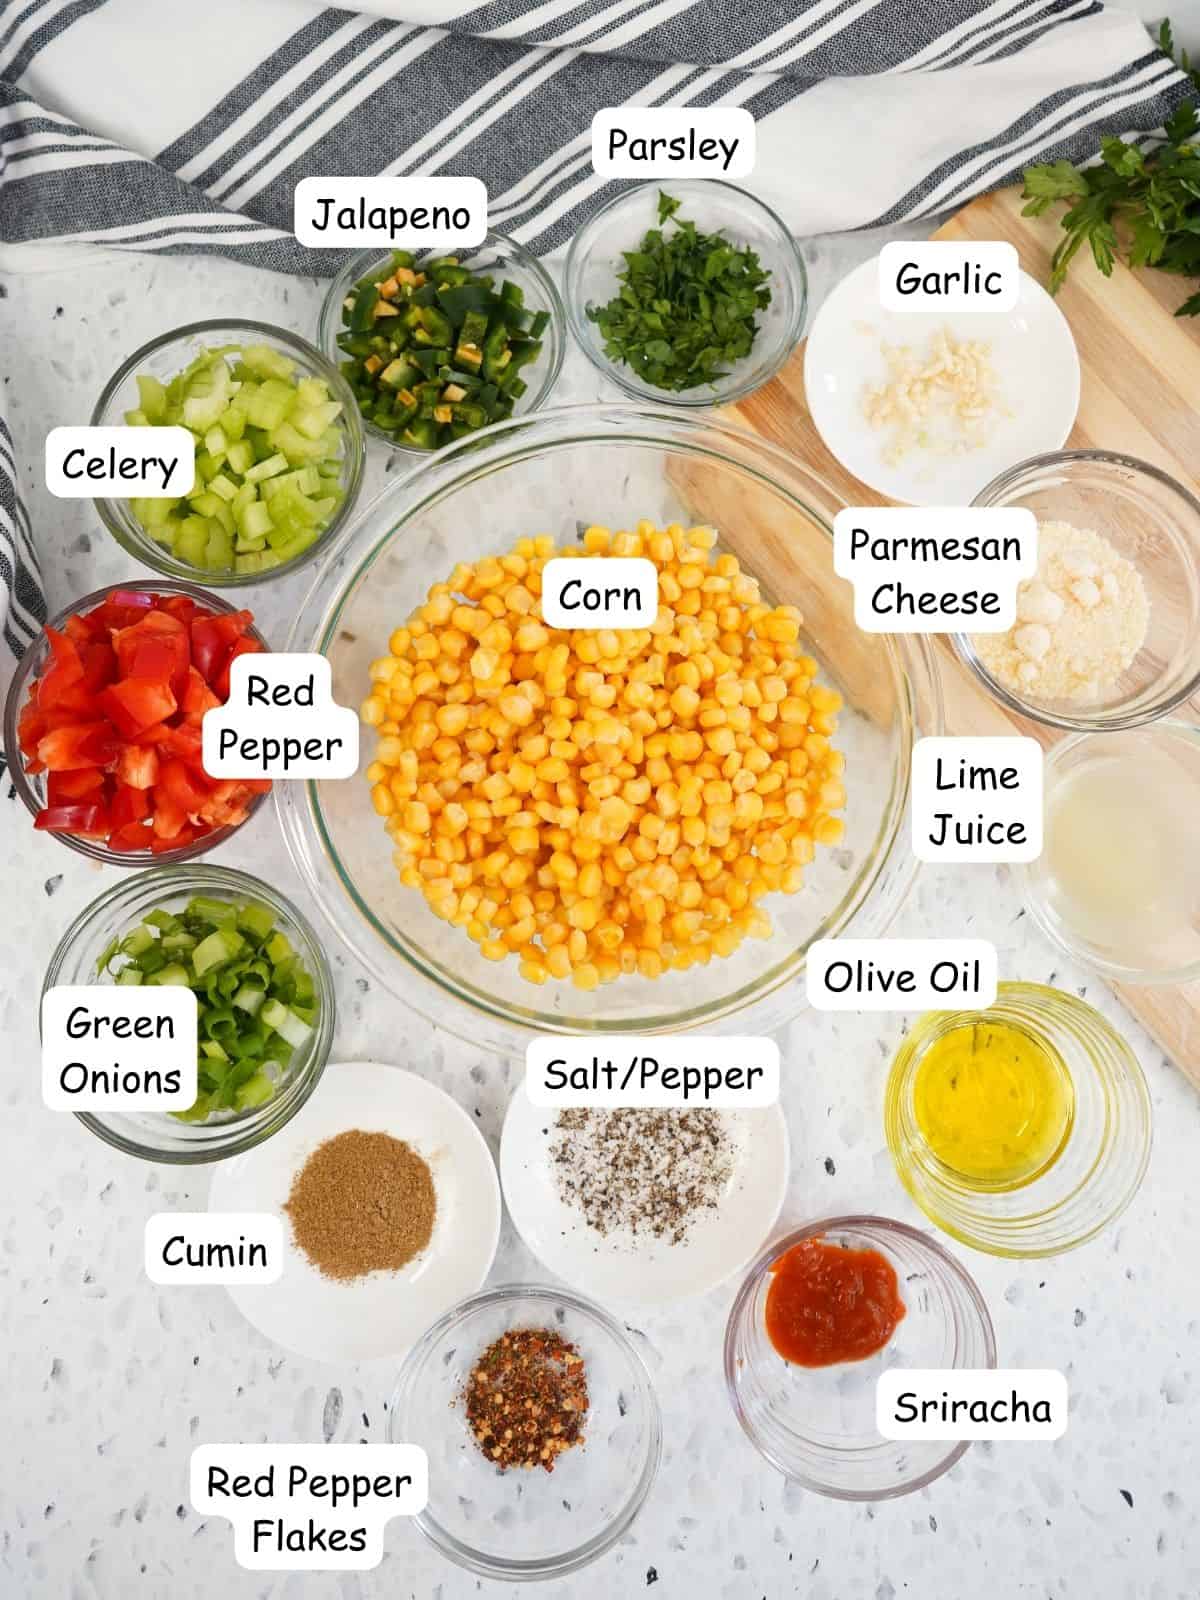 Ingredients for corn fiesta salad in bowls.